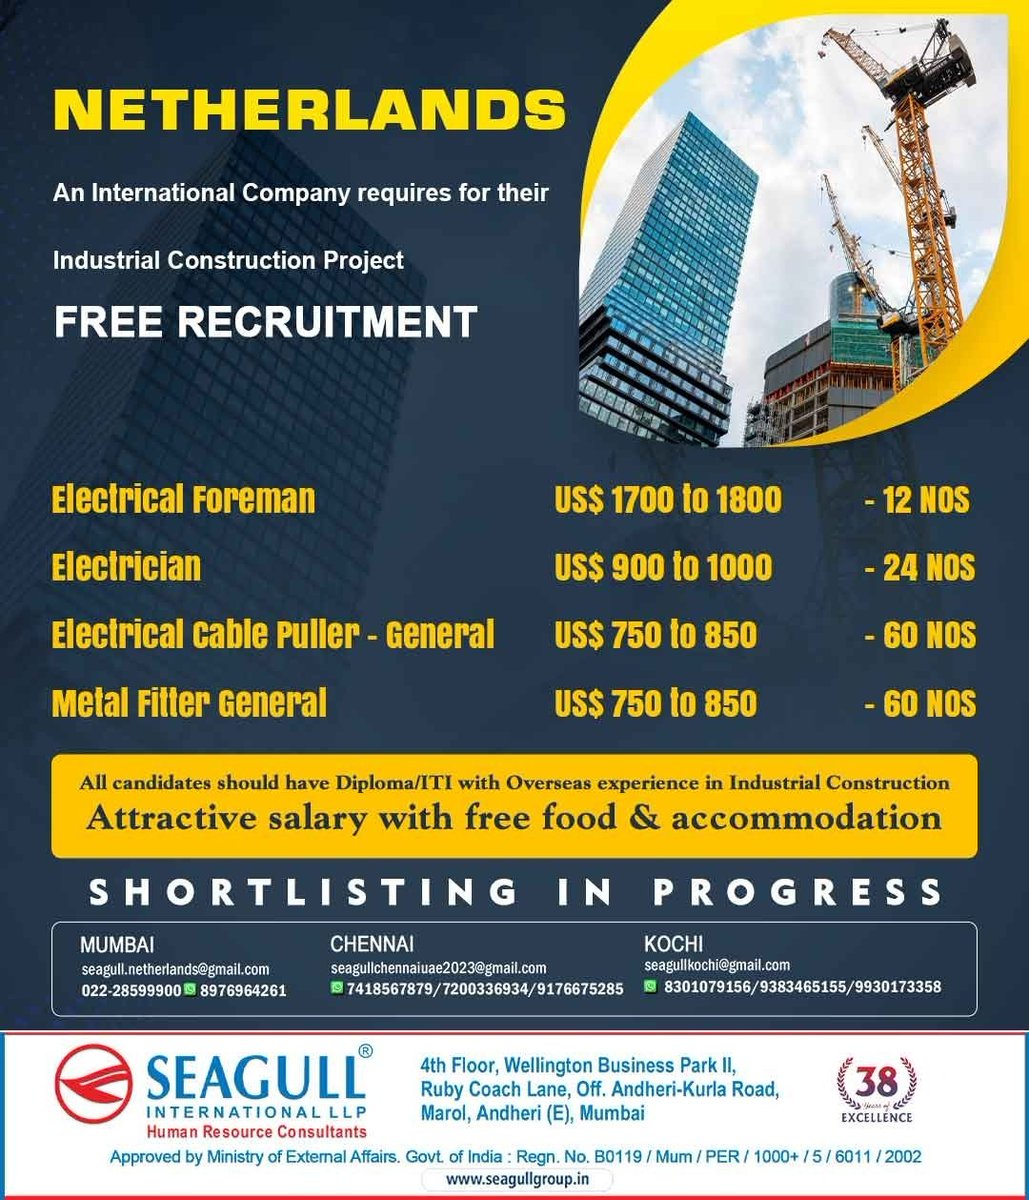 🇳🇱Netherlands Jobs 
‼️Free Recruitment 
✔️Shortlisting In Progress 
📍Location- Mumbai , Chennai , Kochi
.

.

.
#netherlandsjobs #seagull #mumbaijobs #chennaijobs #kochijobs #electricalforeman #electrician #electricalcablepuller #metalfitter